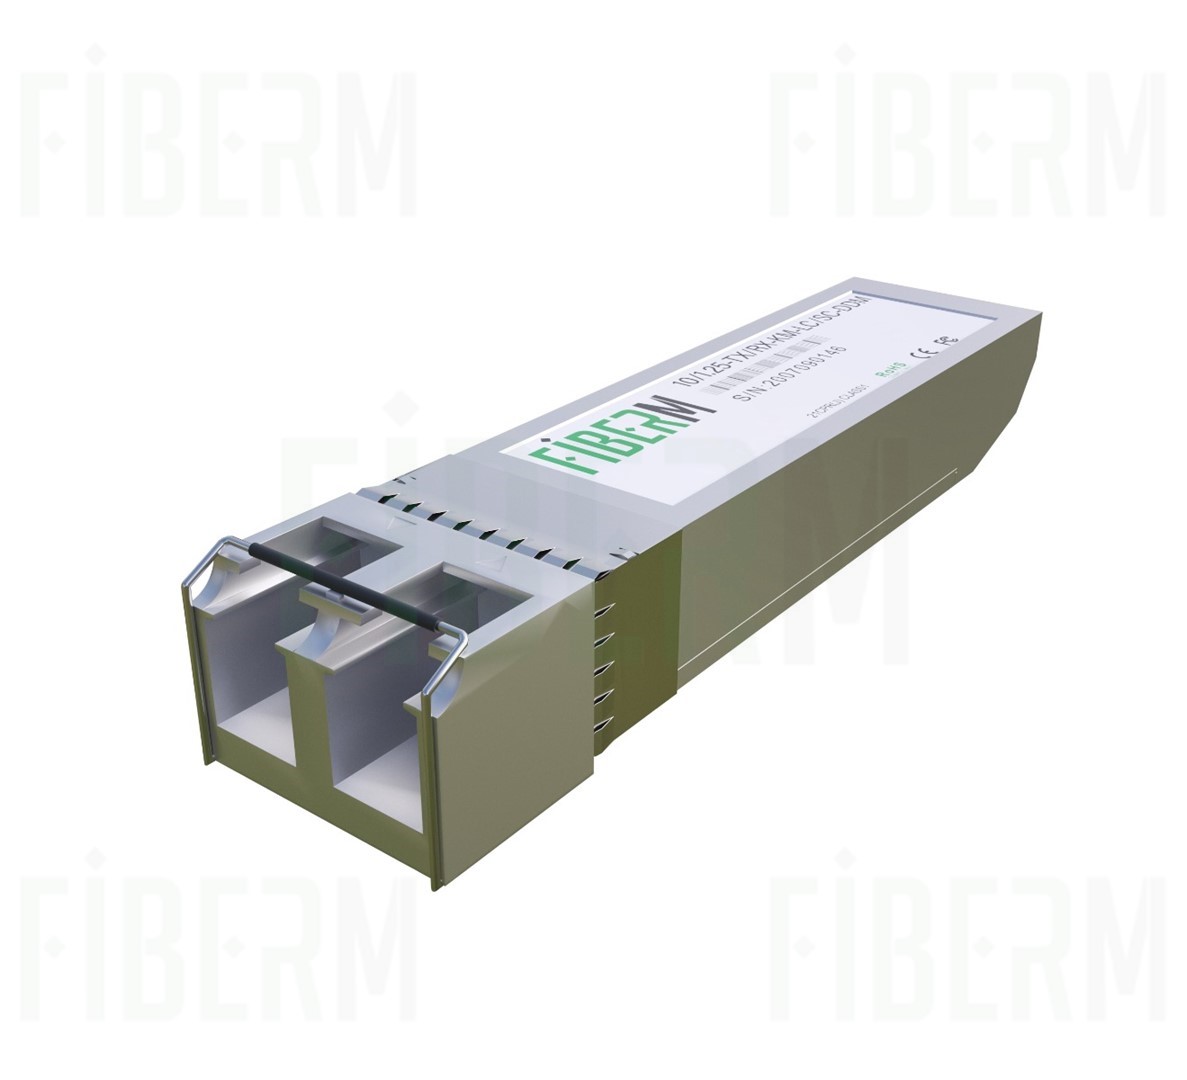 FIBERM Wkładka SFP+ DUAL MM LC 300m TX850 DDM FI-PMM-D-3-8-LD